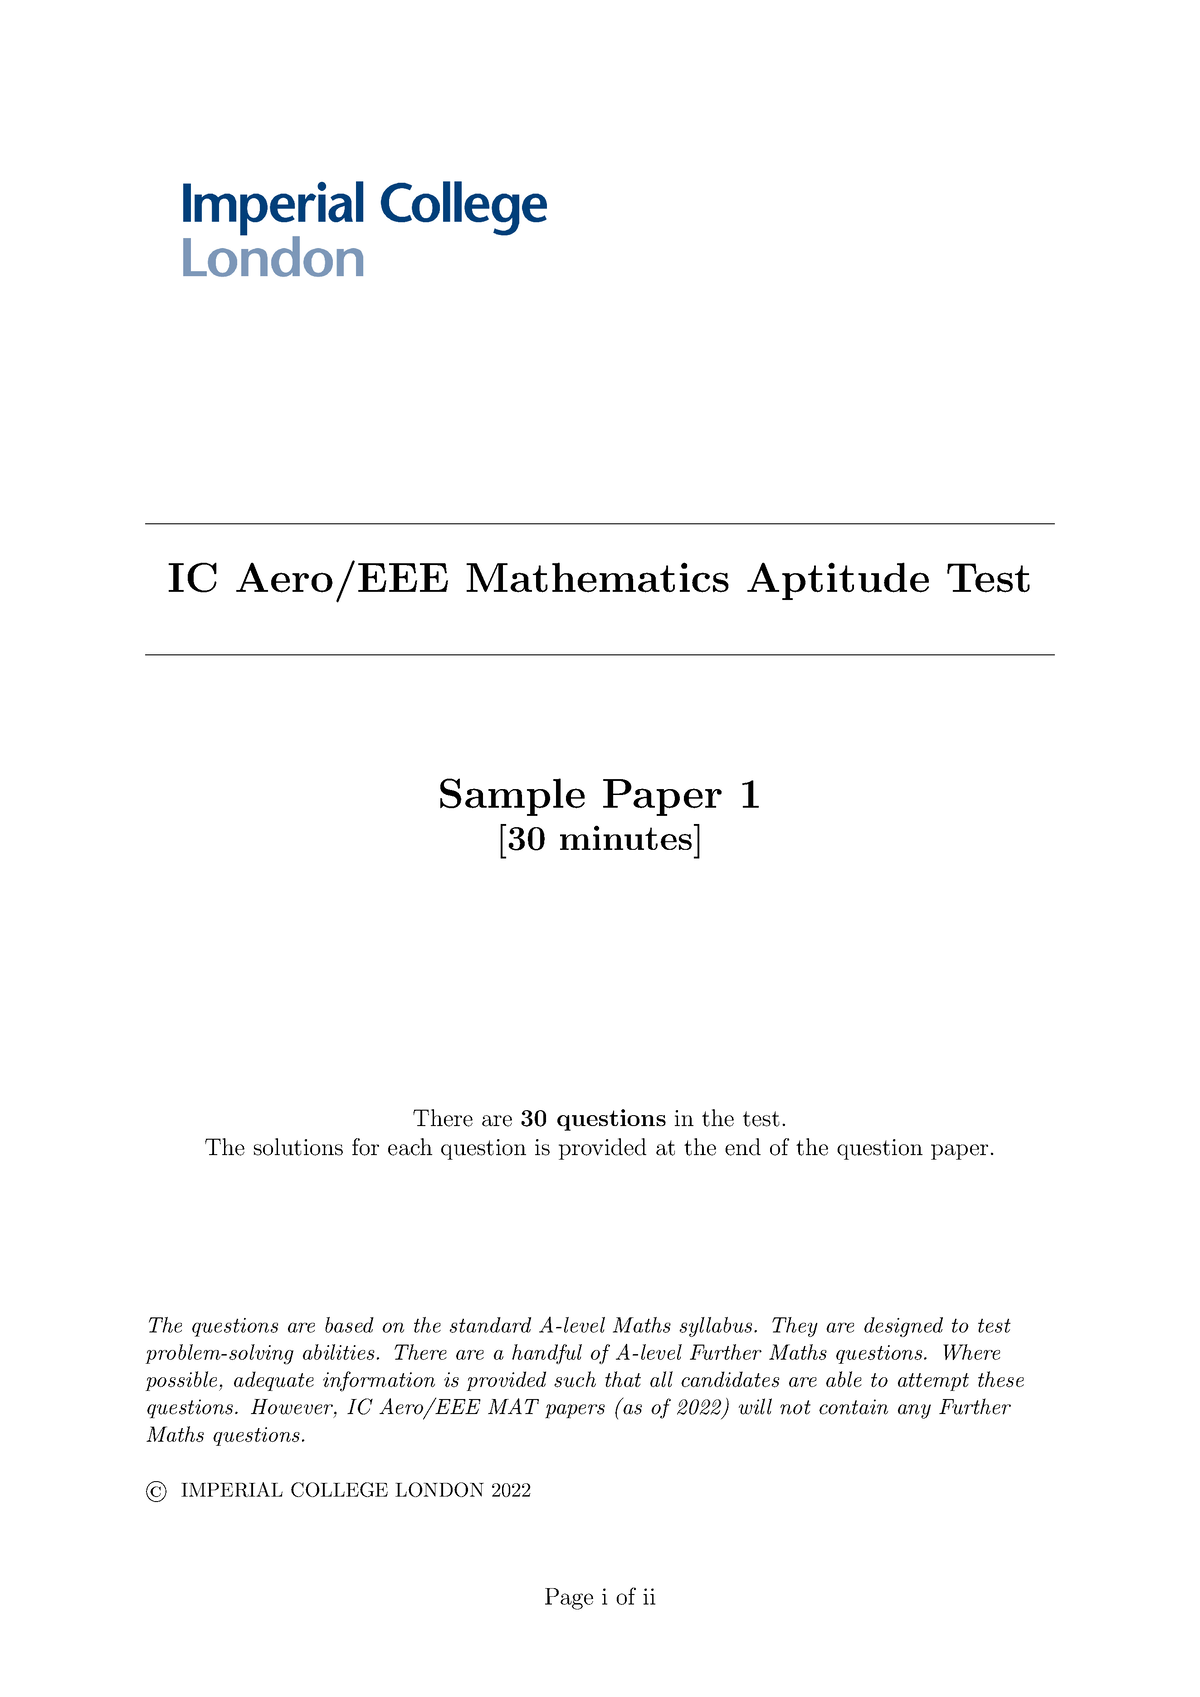 Sample 1 Practice Aero MAT IC Aero EEE Mathematics Aptitude Test Sample Paper 1 30 Minutes